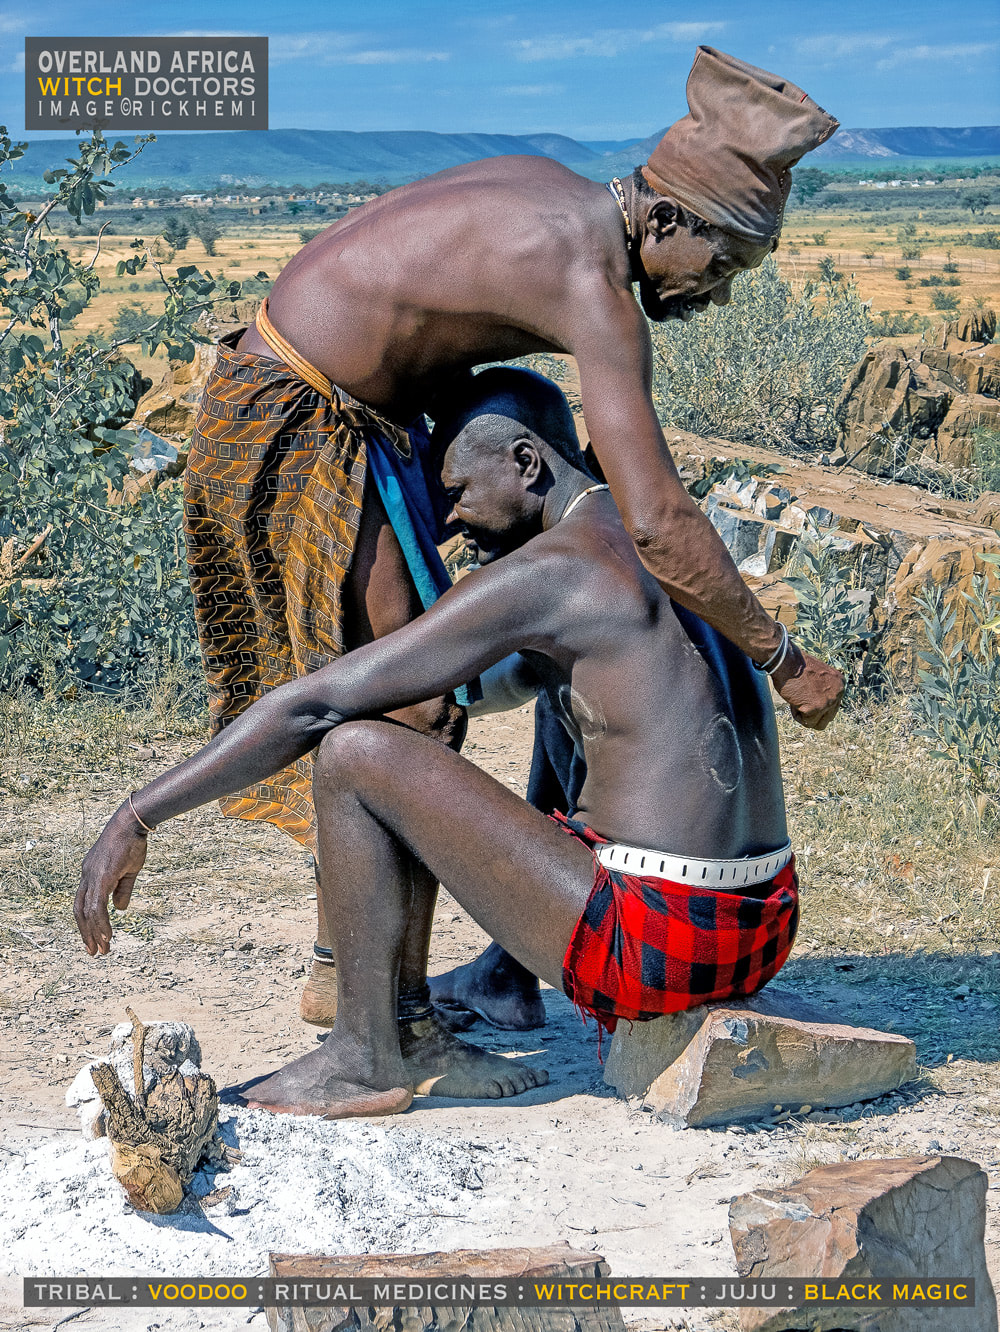 overland travel Africa, voodoo, bush doctor, medicine man, image by Rick Hemi